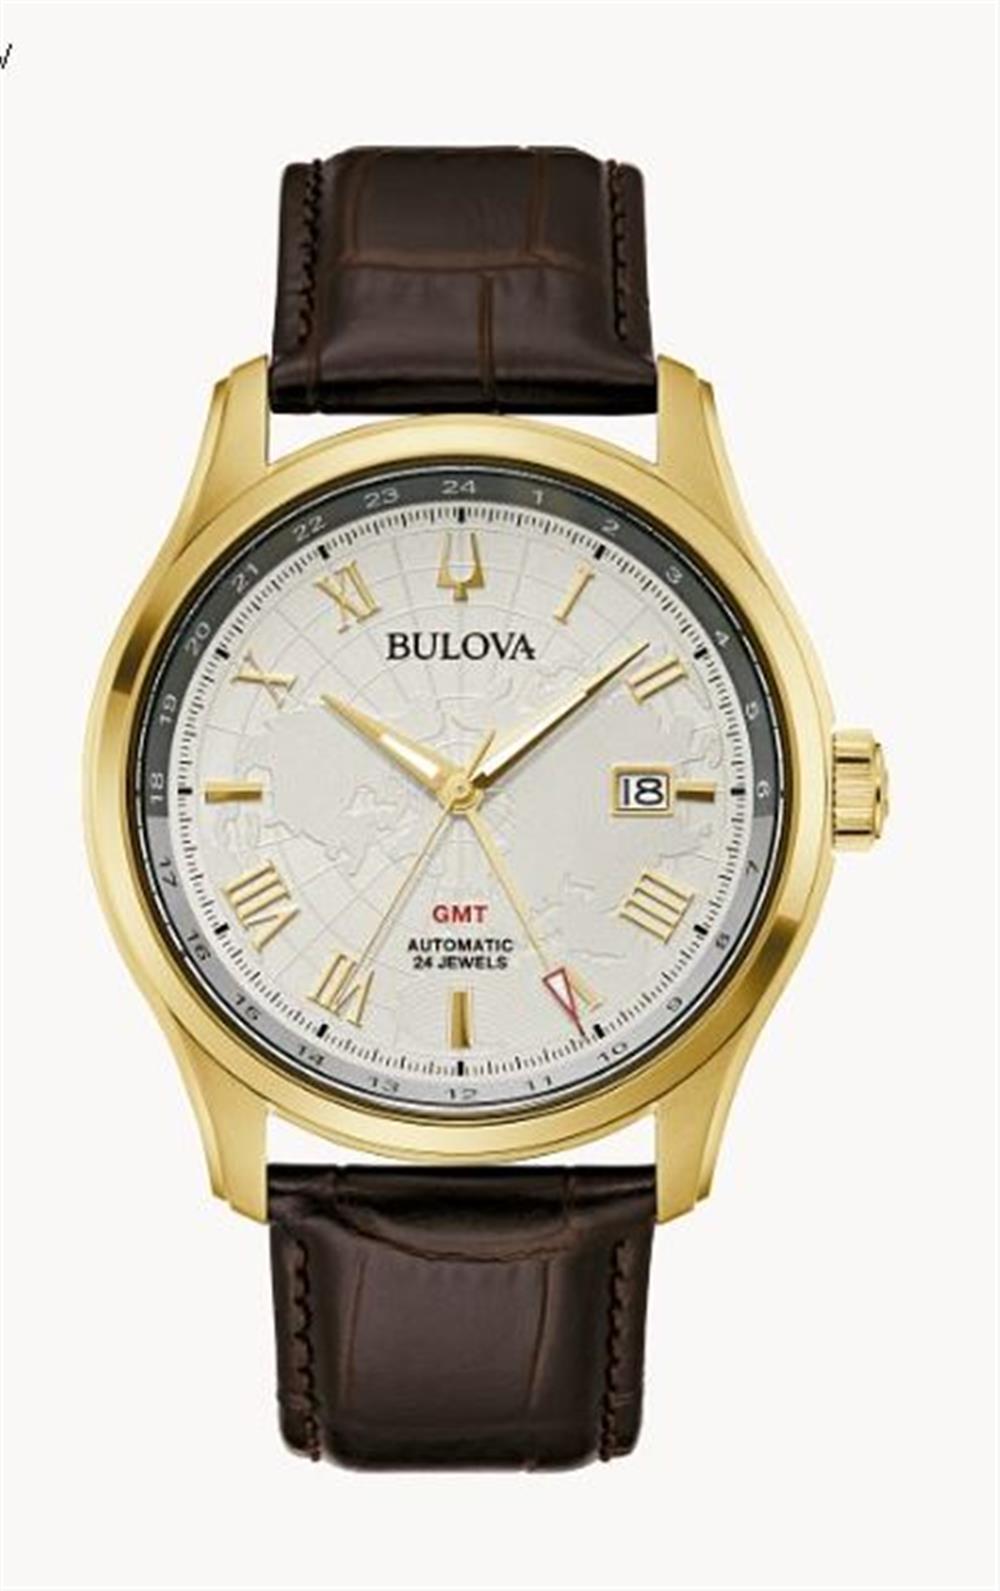 Bulova Wilton Automatic Watch with Leather Strap